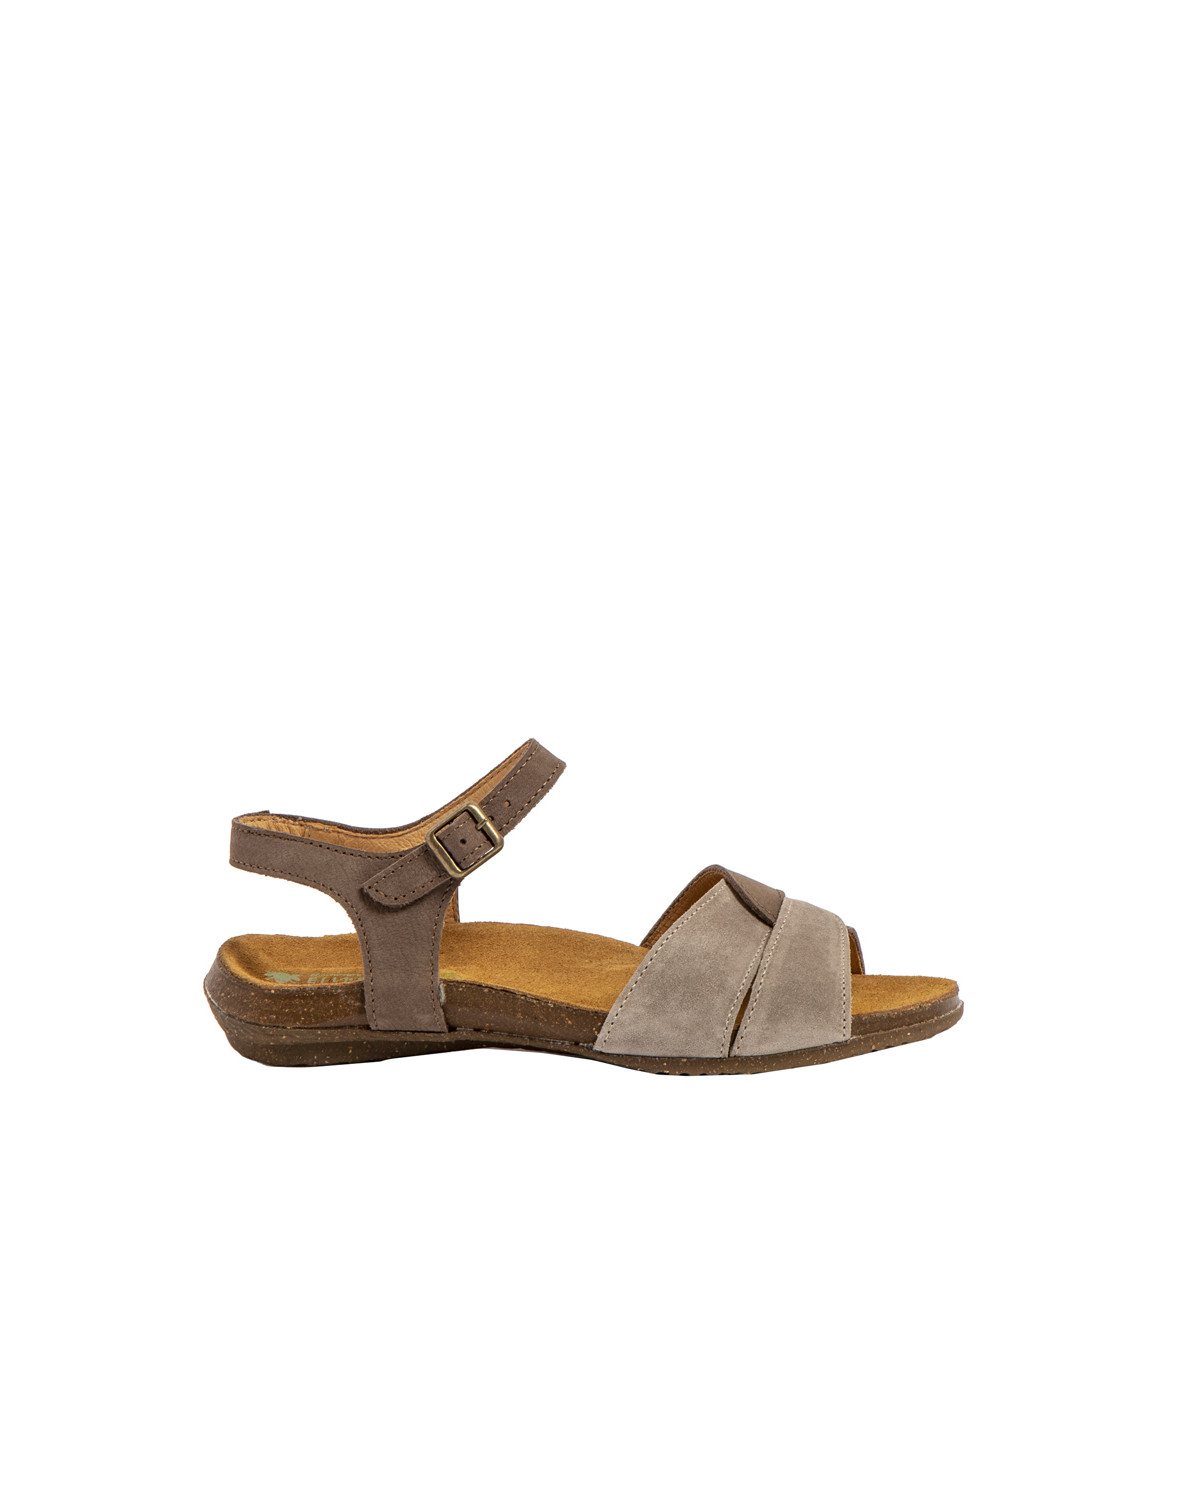 Sandales confortables plates en cuir et daim - Marron - El naturalista